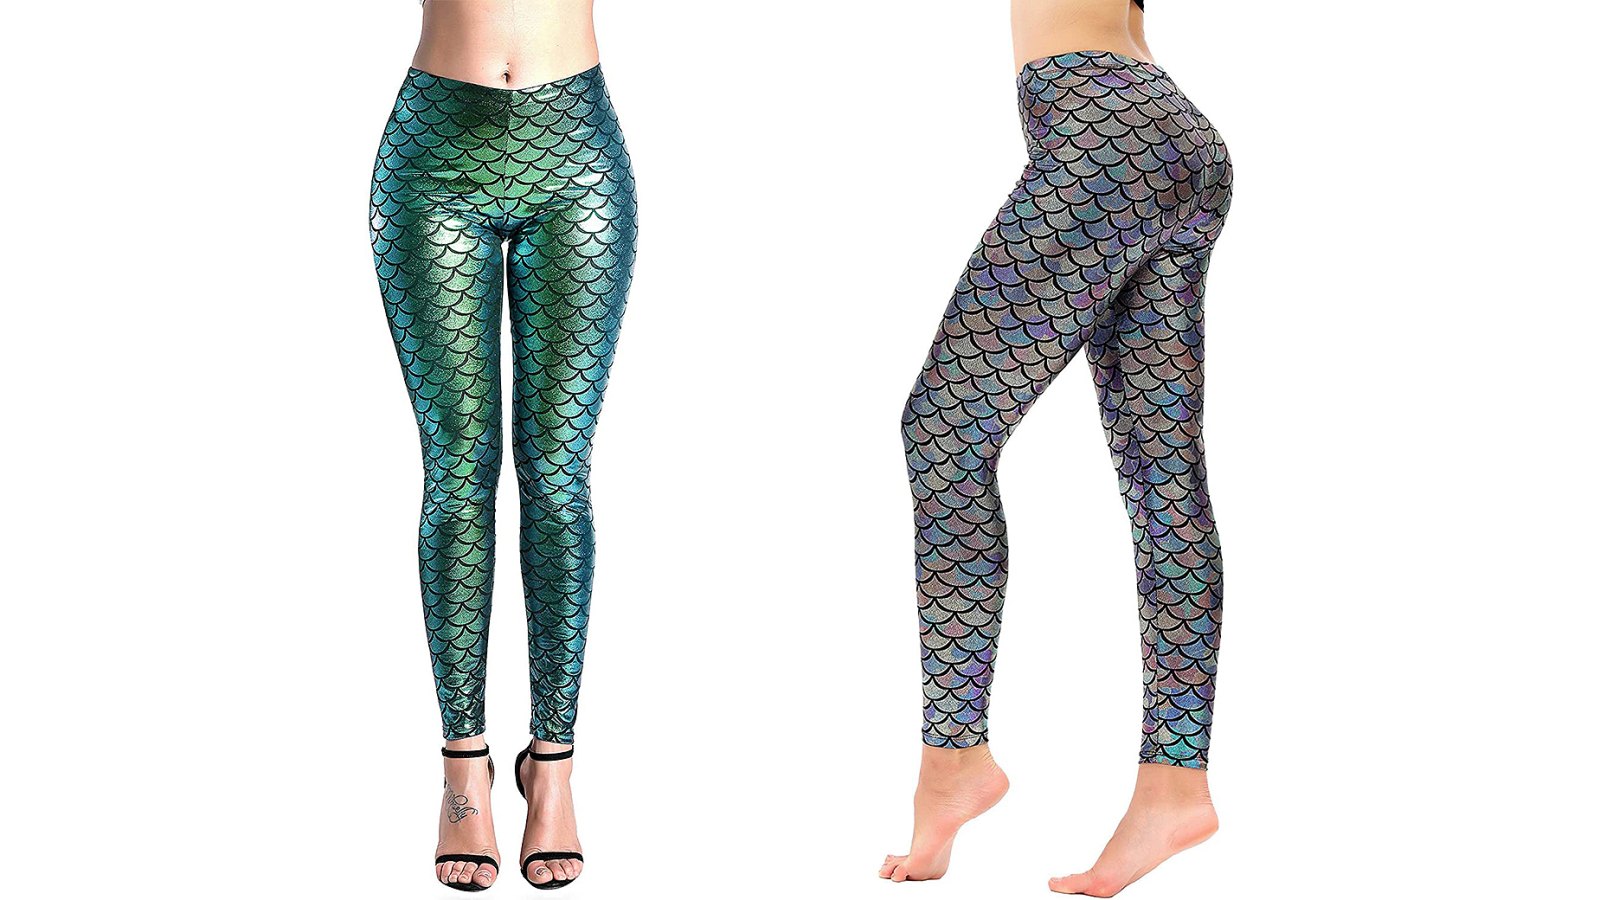 https://www.usmagazine.com/wp-content/uploads/2022/01/amazon-diamond-keep-it-mermaid-leggings.jpg?w=1600&h=900&crop=1&quality=86&strip=all